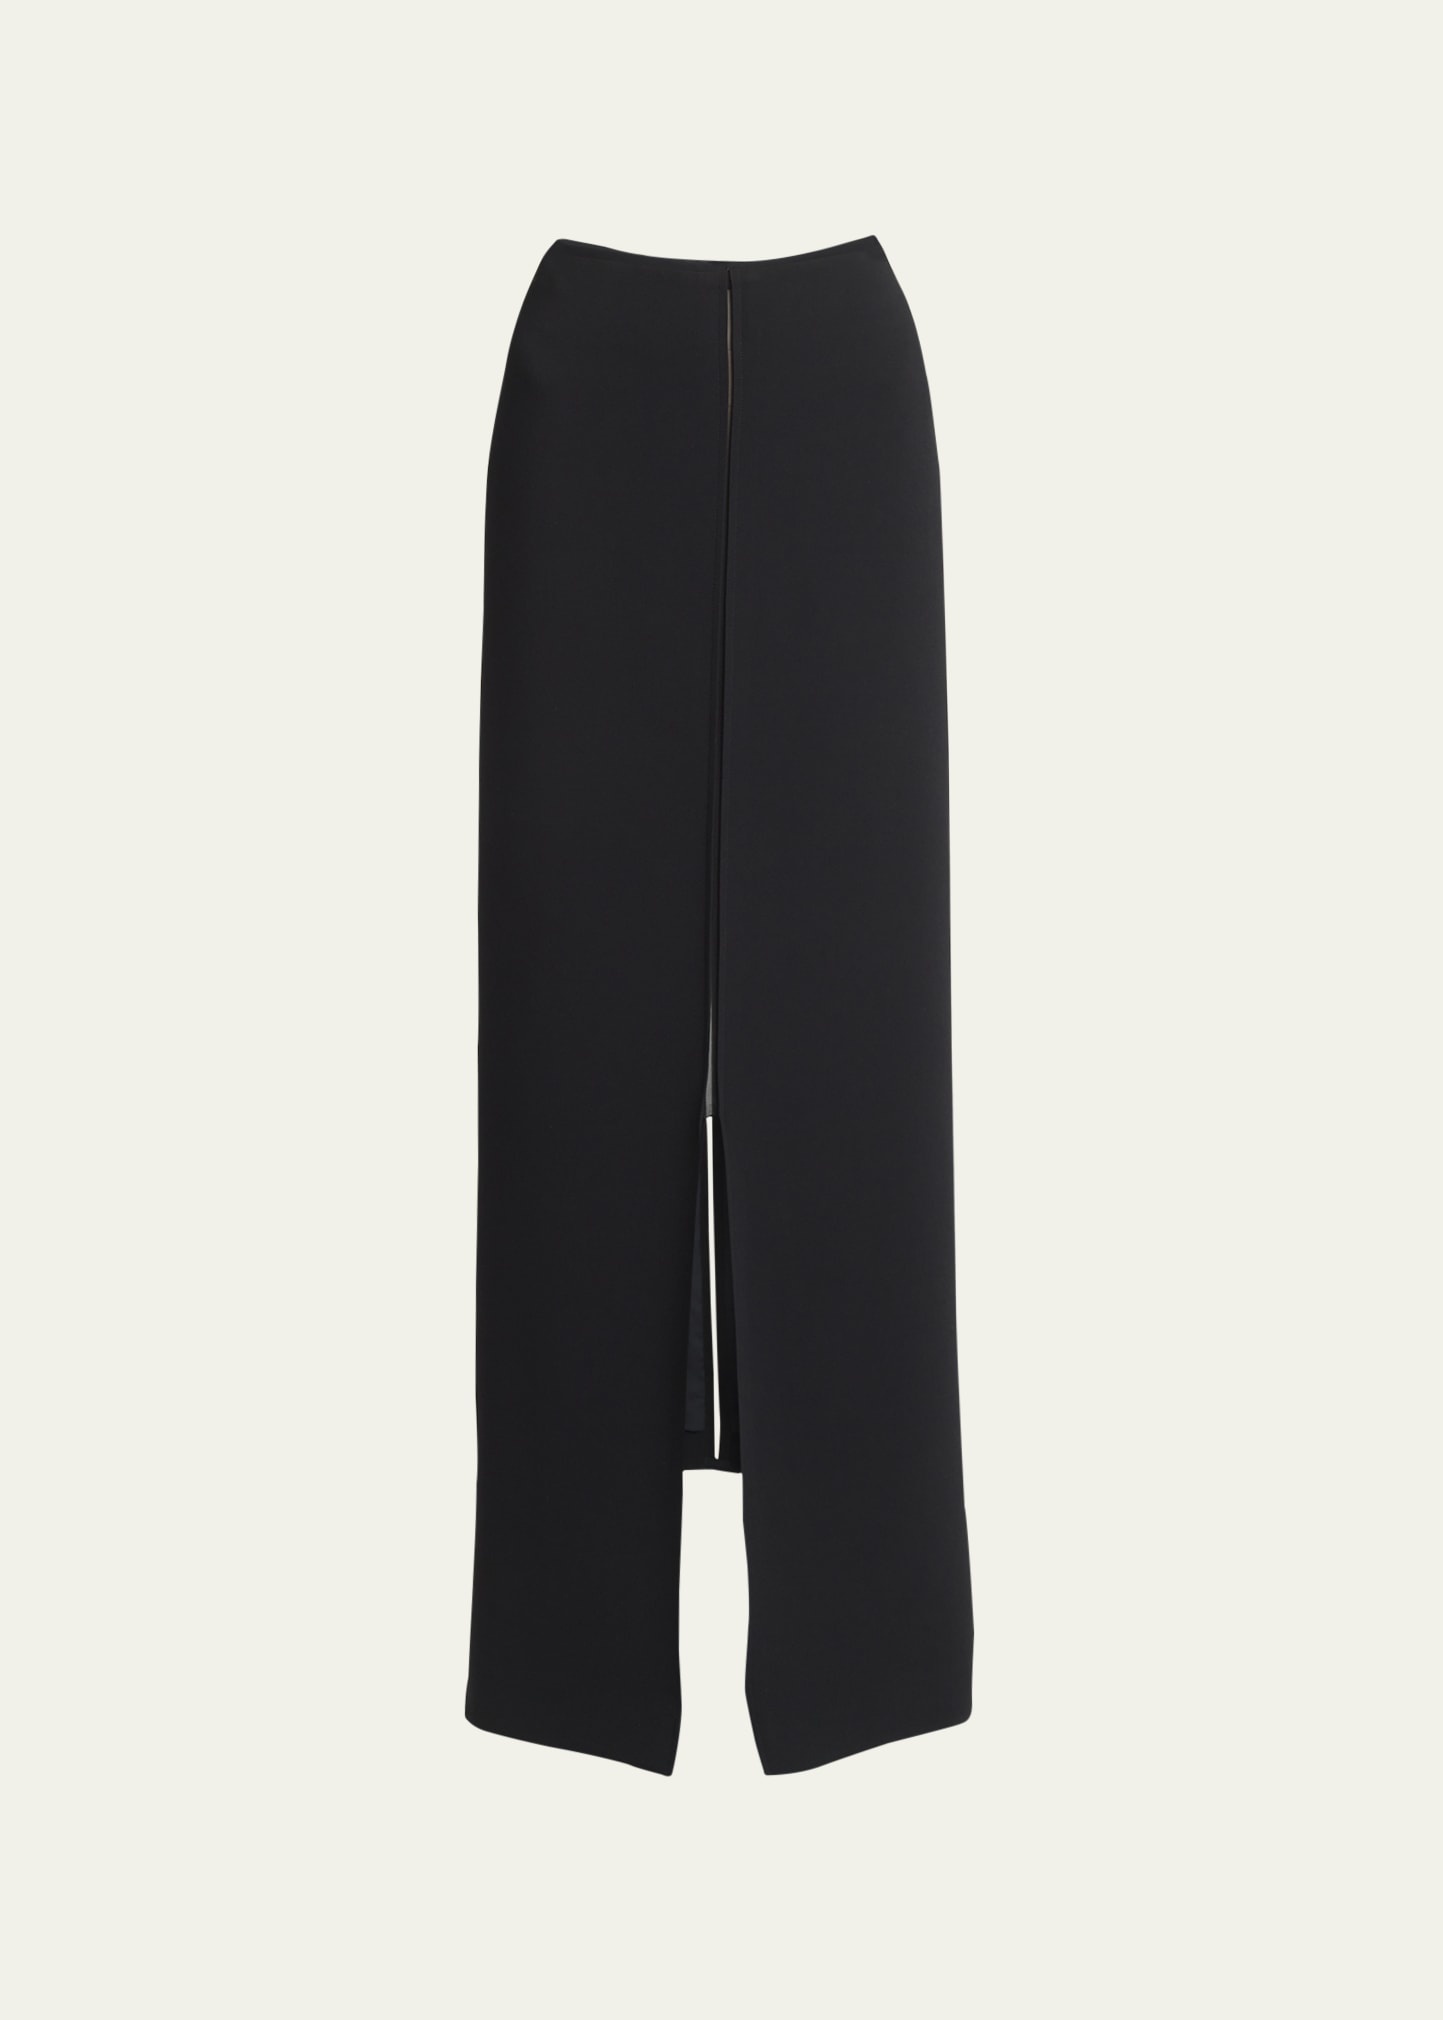 Formal Asymmetric Wool Skirt - 1